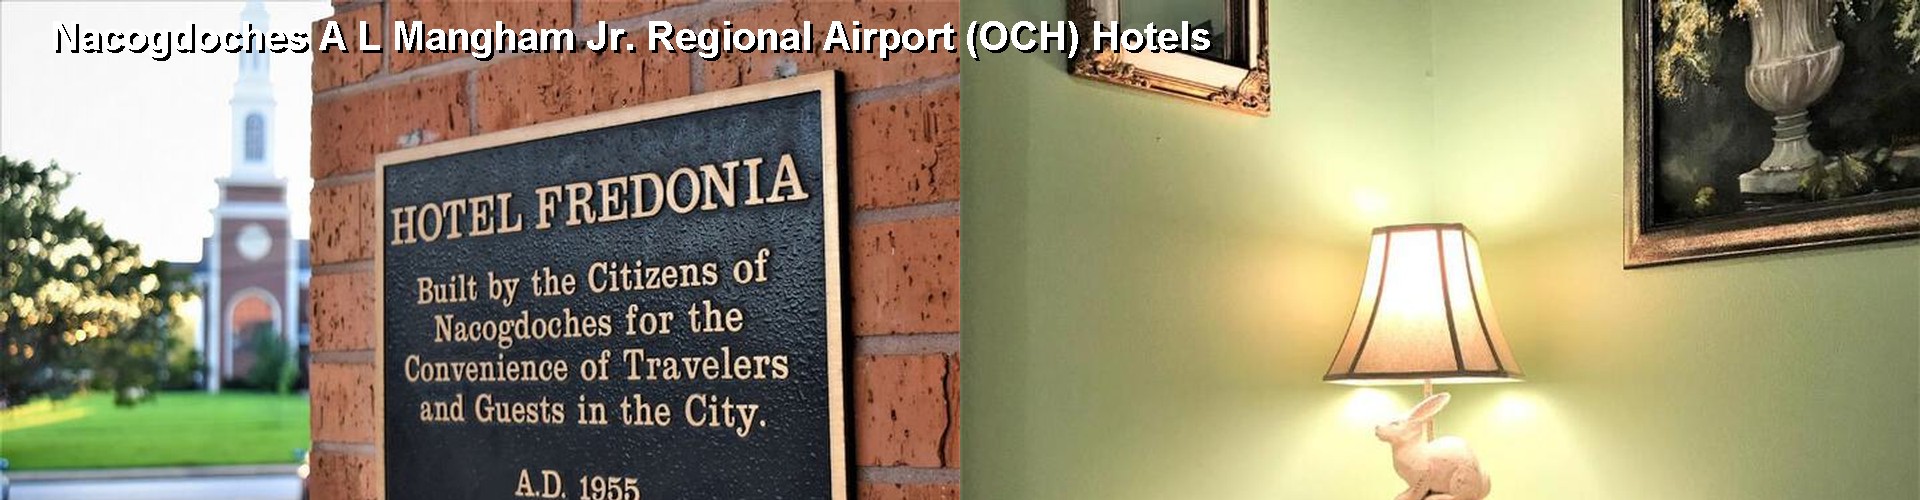 5 Best Hotels near Nacogdoches A L Mangham Jr. Regional Airport (OCH)